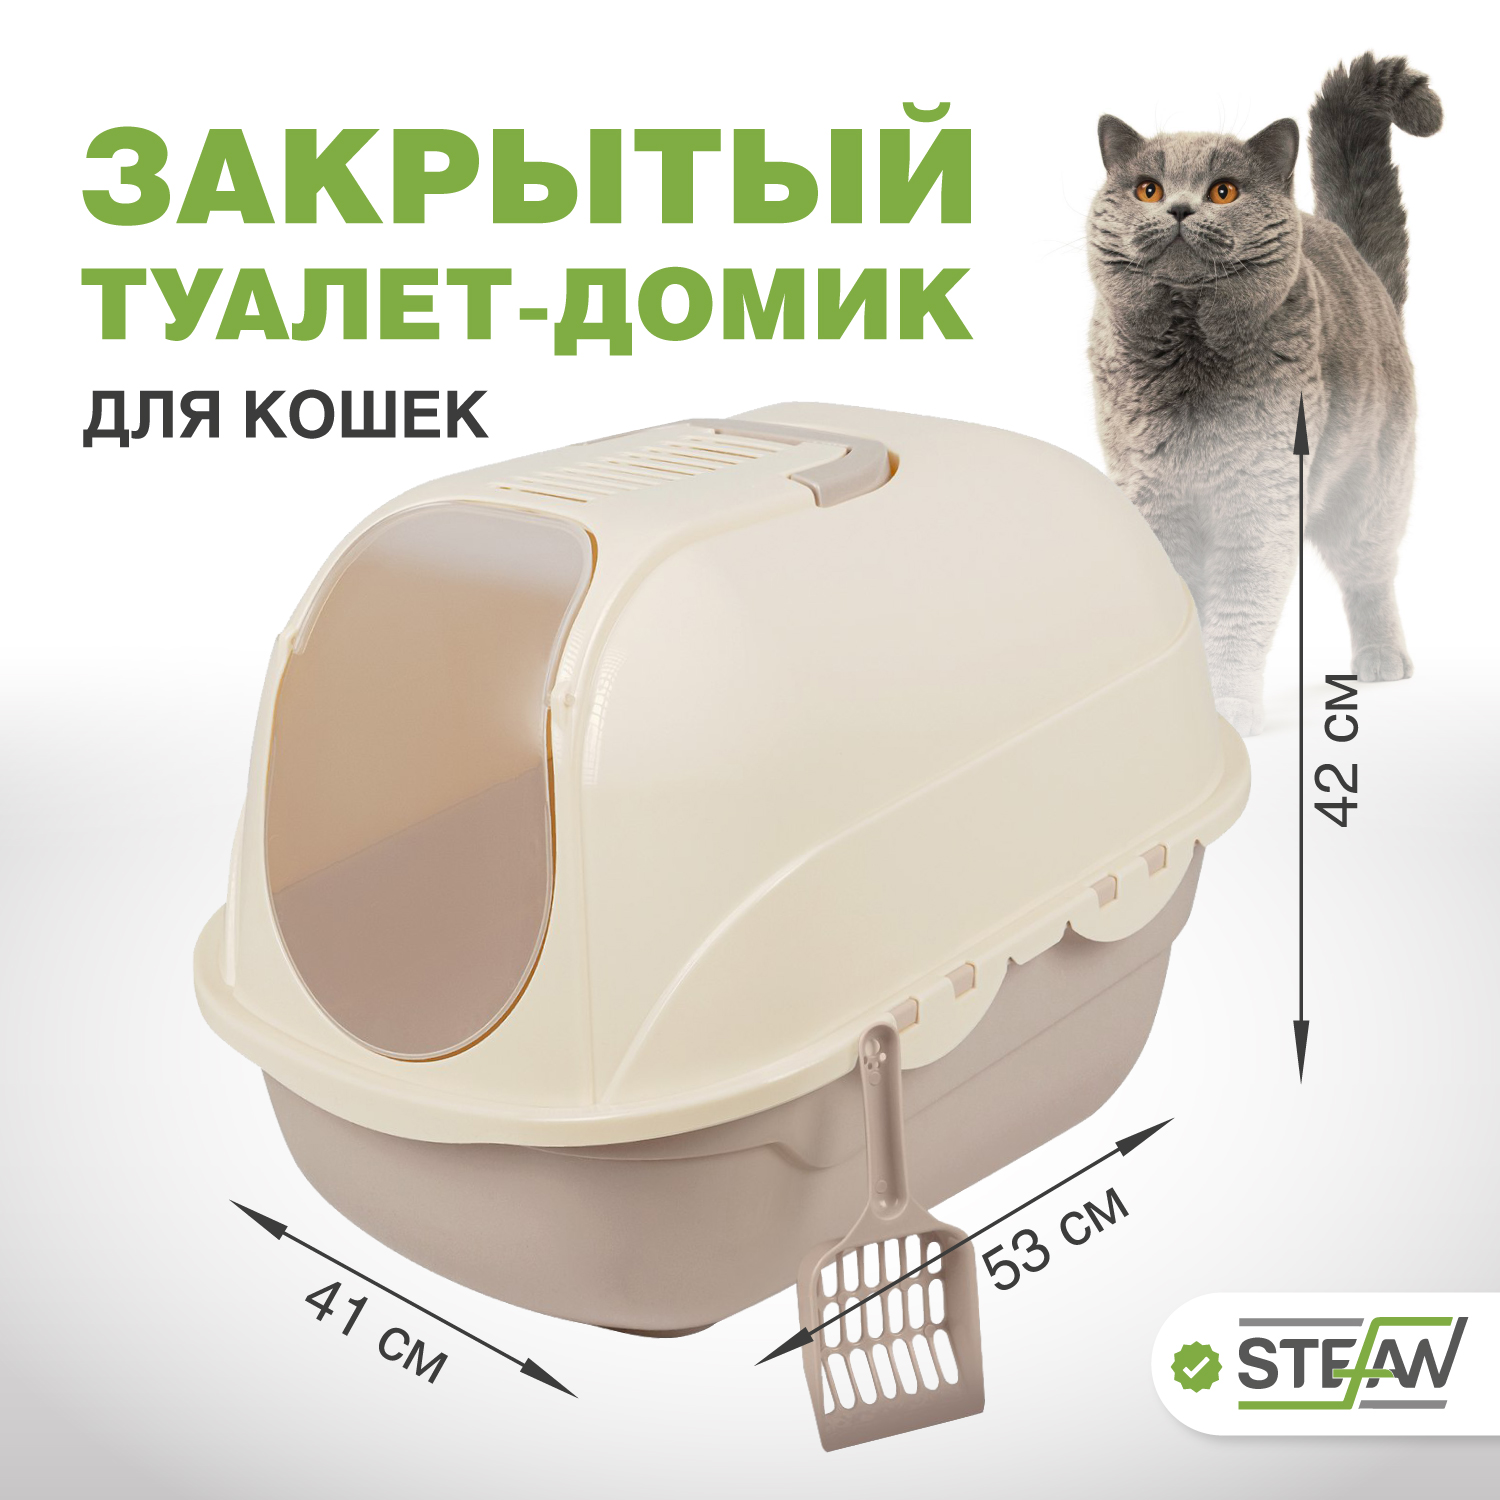 Туалет домик закрытый для кошек STEFAN, средний (М) 53х41х42, бежевый